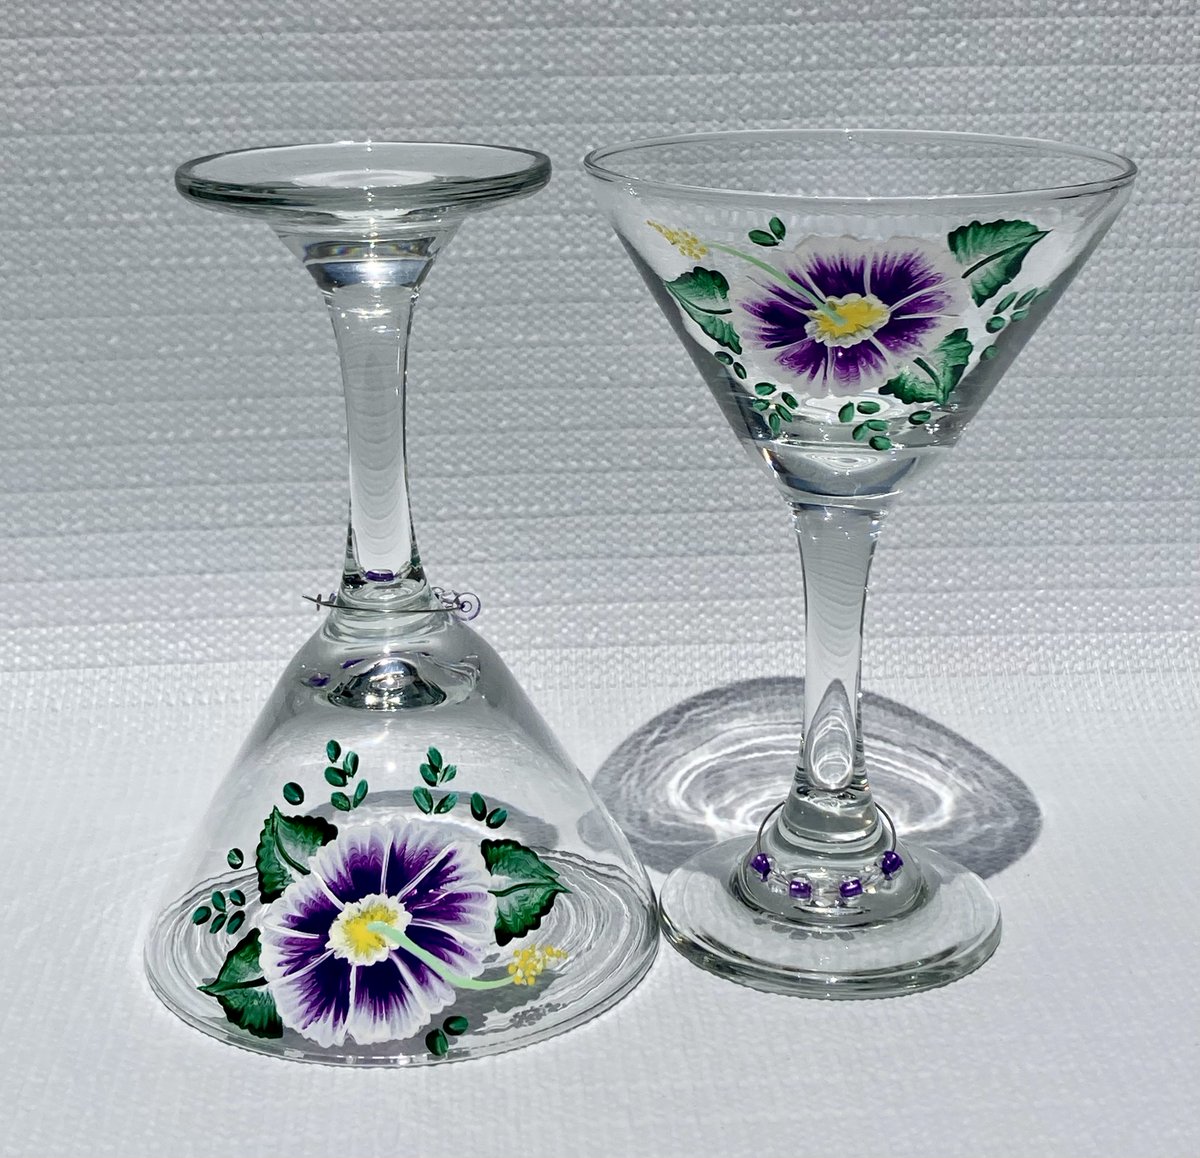 Cool gift for Mom etsy.com/listing/123984… #mothersday #mothersdaygift #martiniglasses #SMILEtt23 #CraftBizParty #cocktailglasses #etsygifts